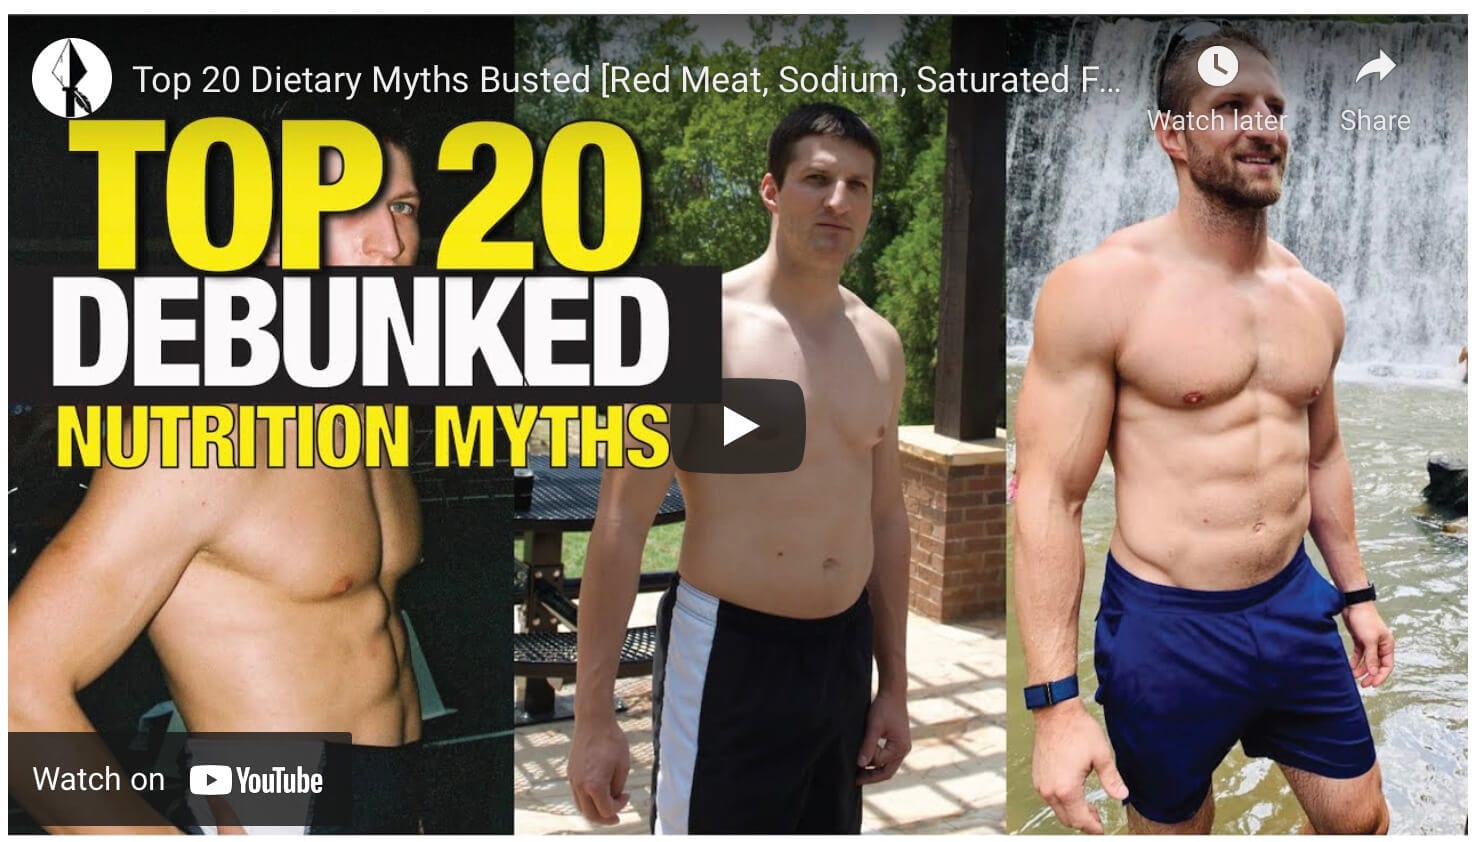 Dietary myths video thumbnail.